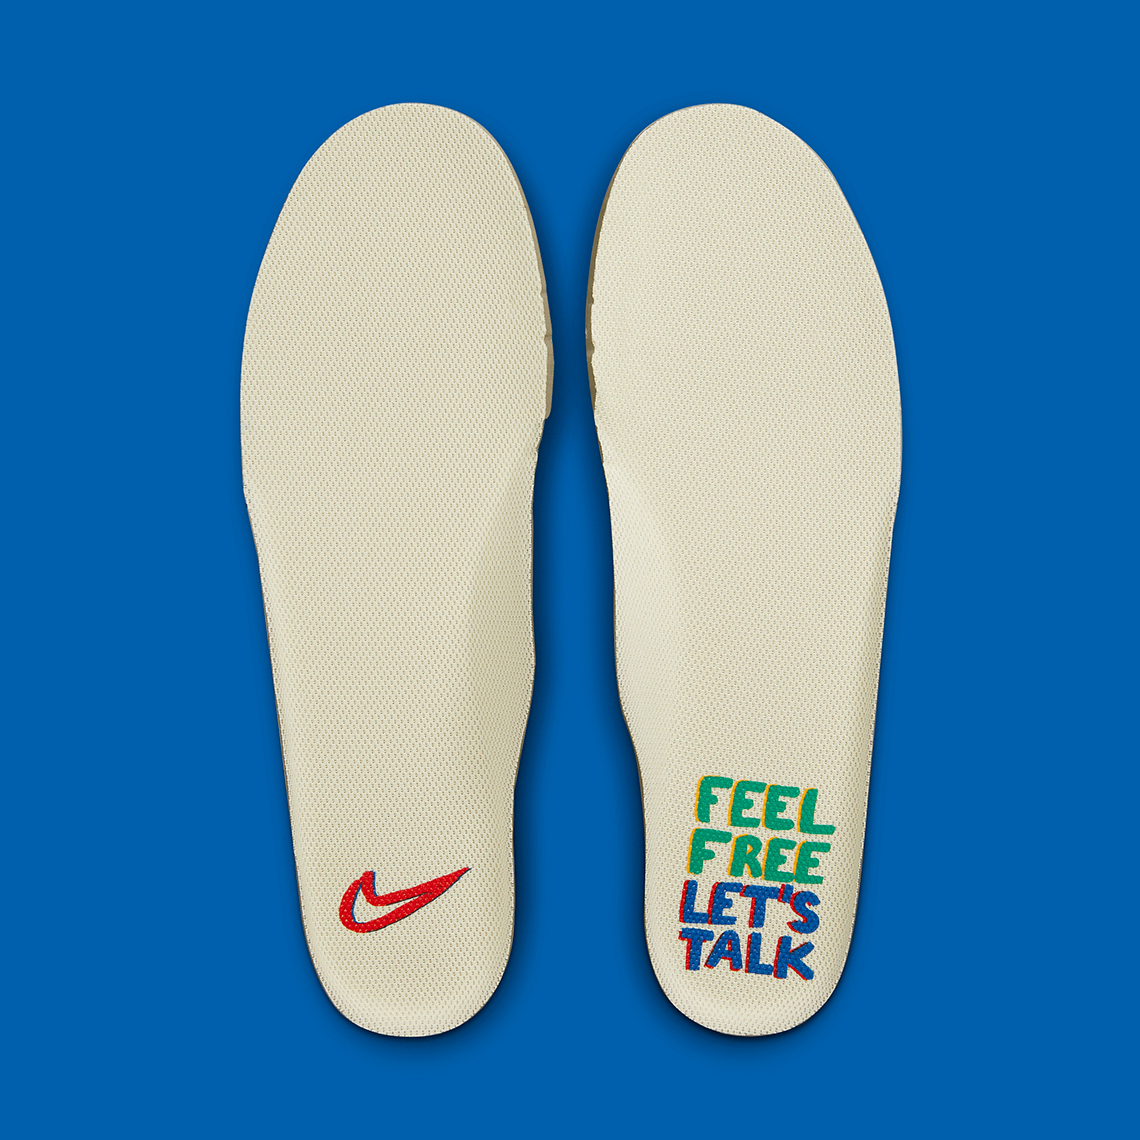 Nike-Air-Force-1-Low-Feel-Free-Lets-Talk-DX2667-600-9.jpg